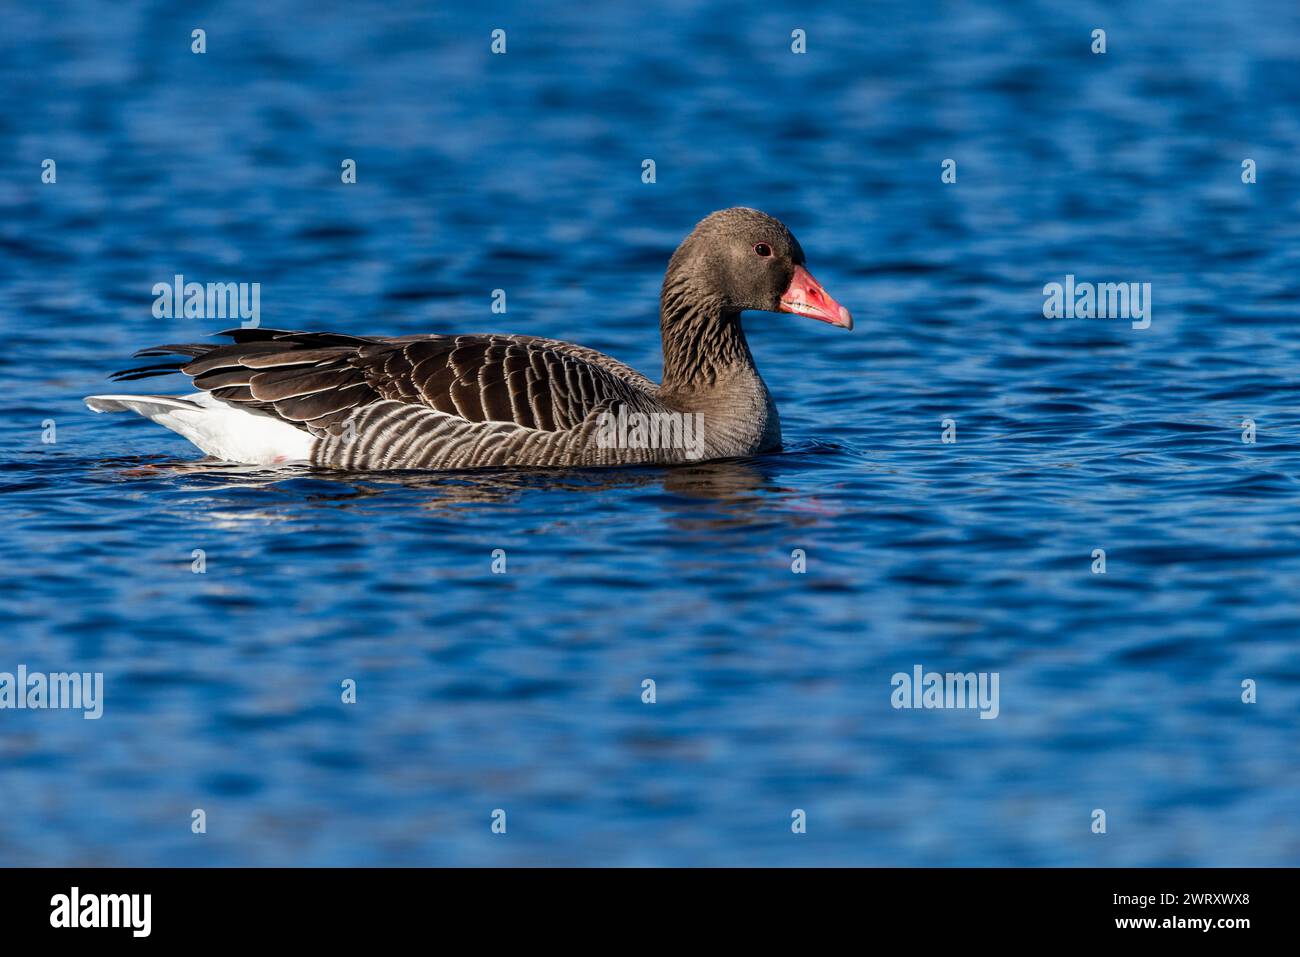 Greylag goose swimming on the wild pond, close up shot Stock Photo